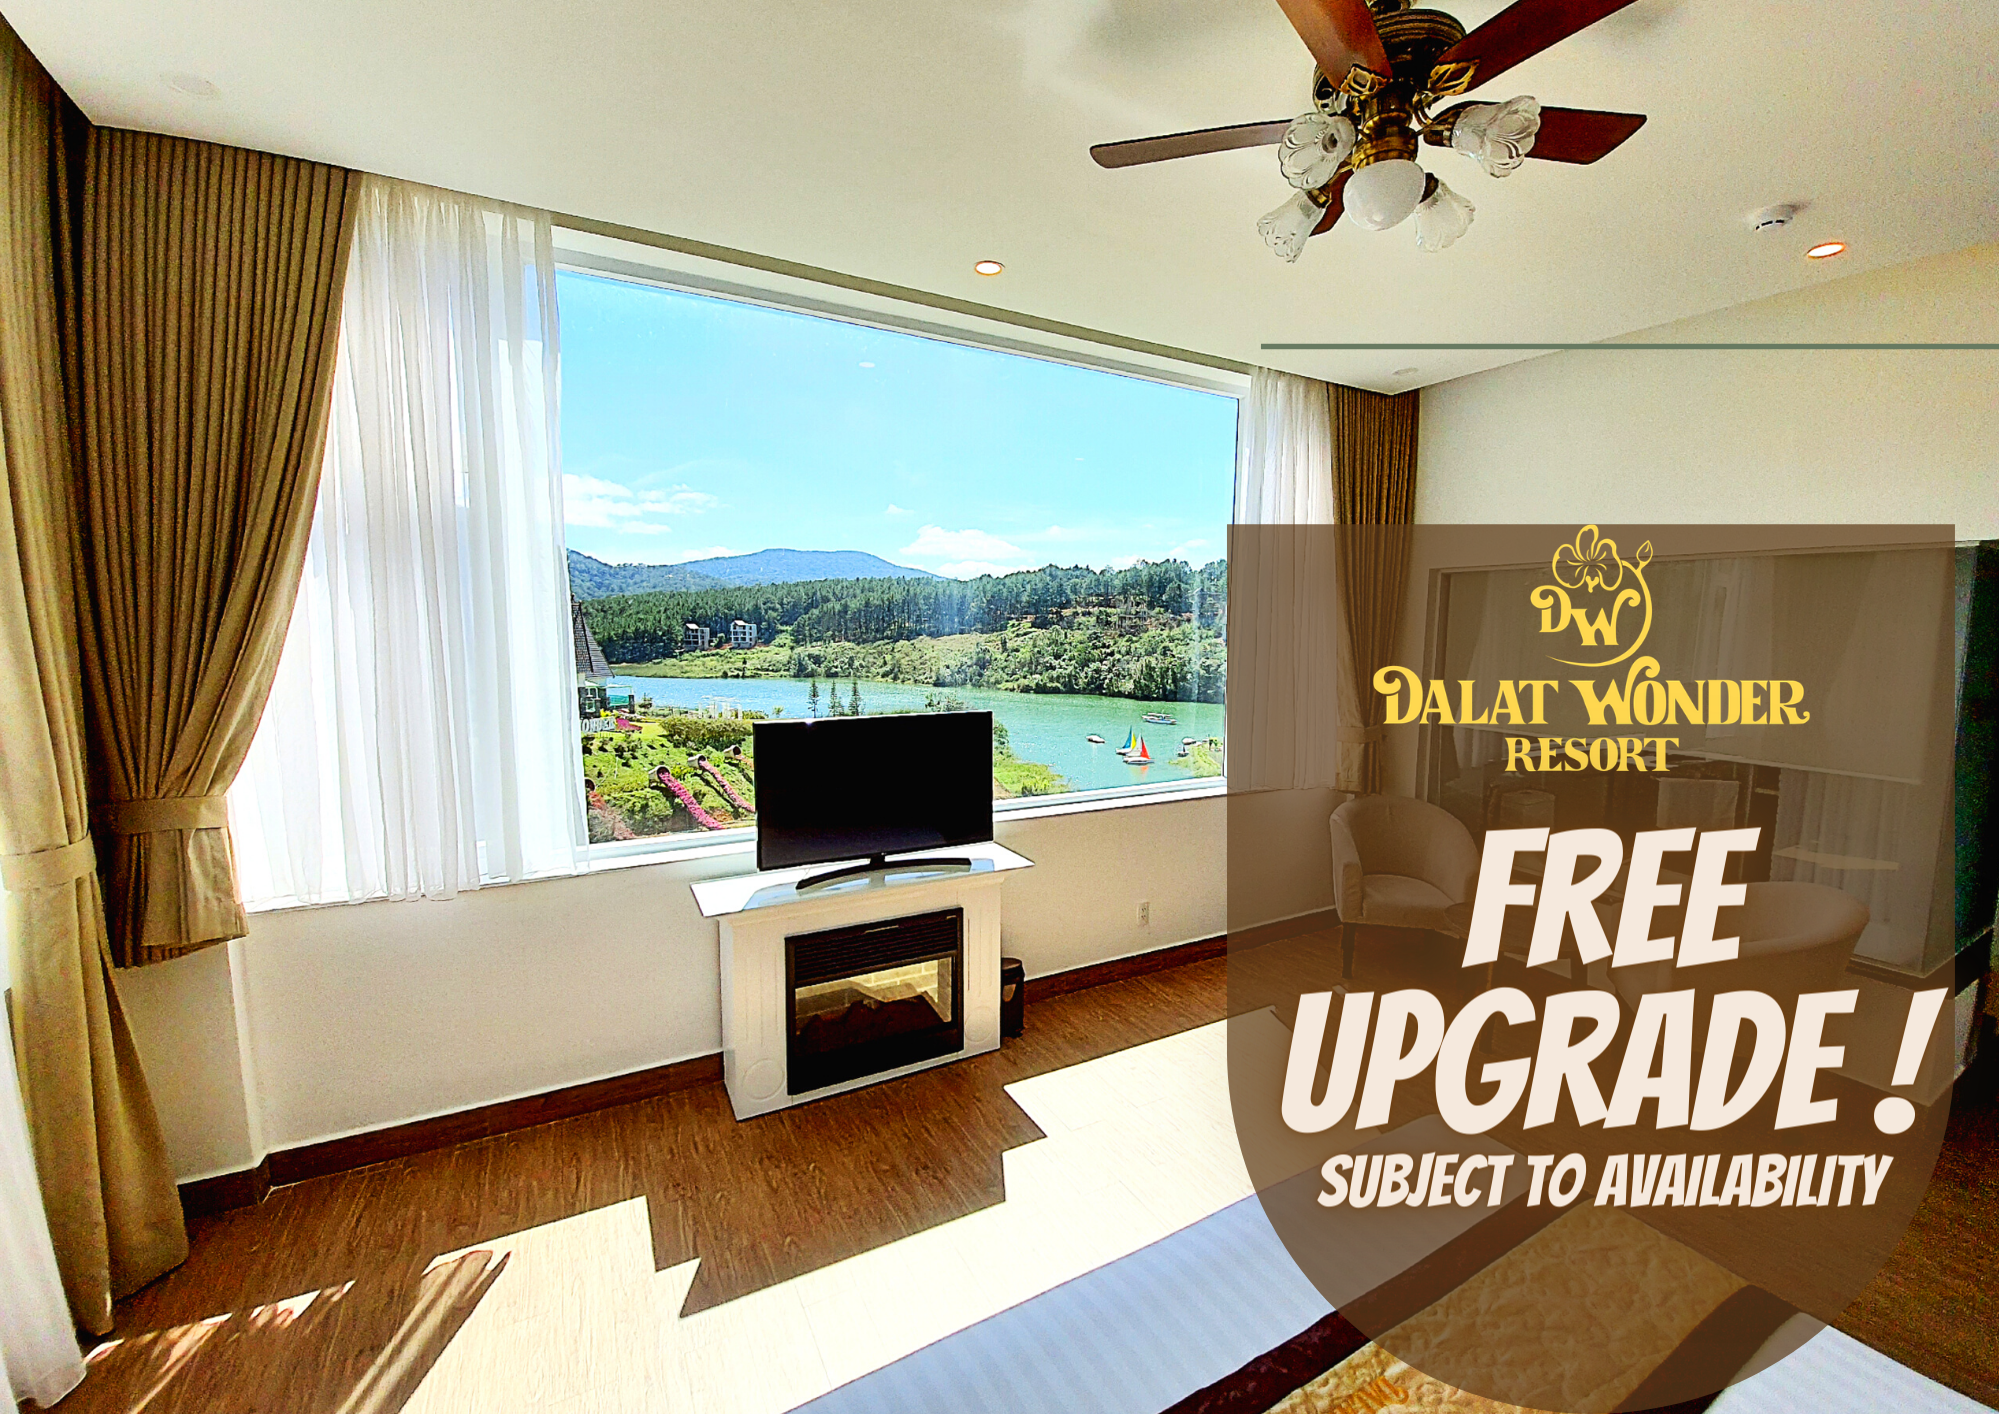 Dalat Wonder Resort image 1